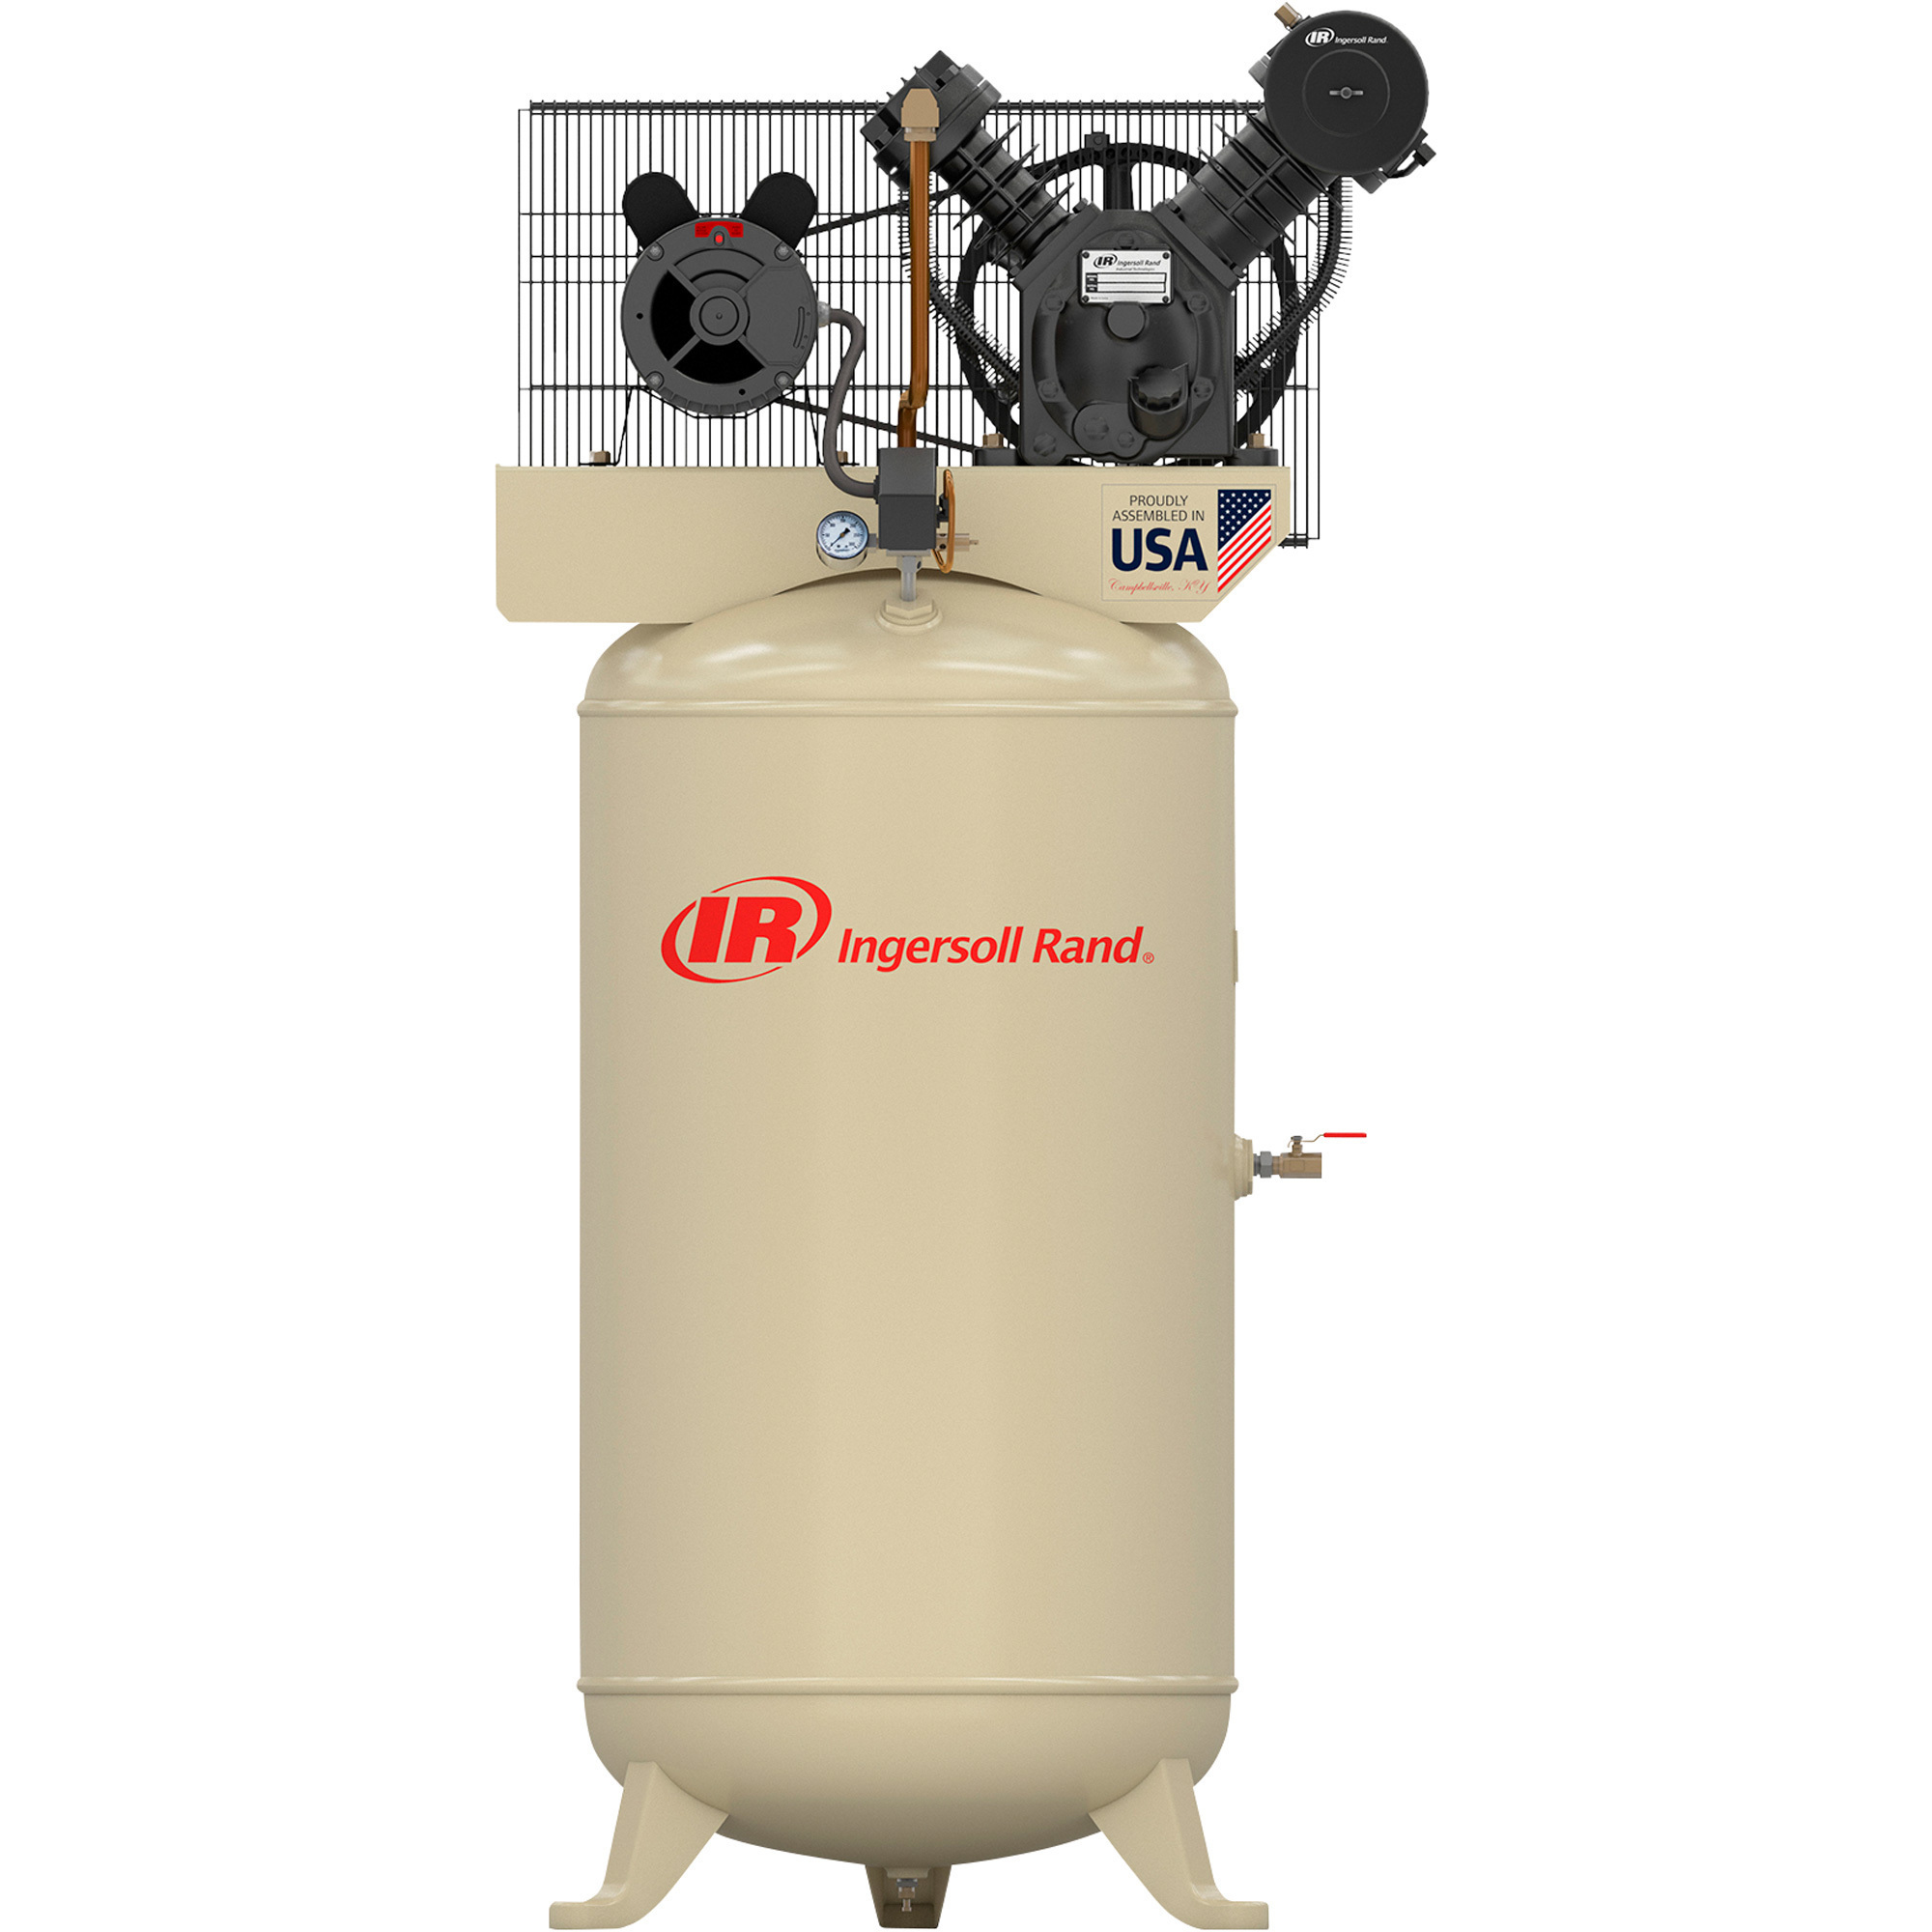 Ingersoll Rand Type-30 Reciprocating Air Compressor, 5 HP, 230 Volt, Single Phase, 80 Gallon, Model 2340N5-V